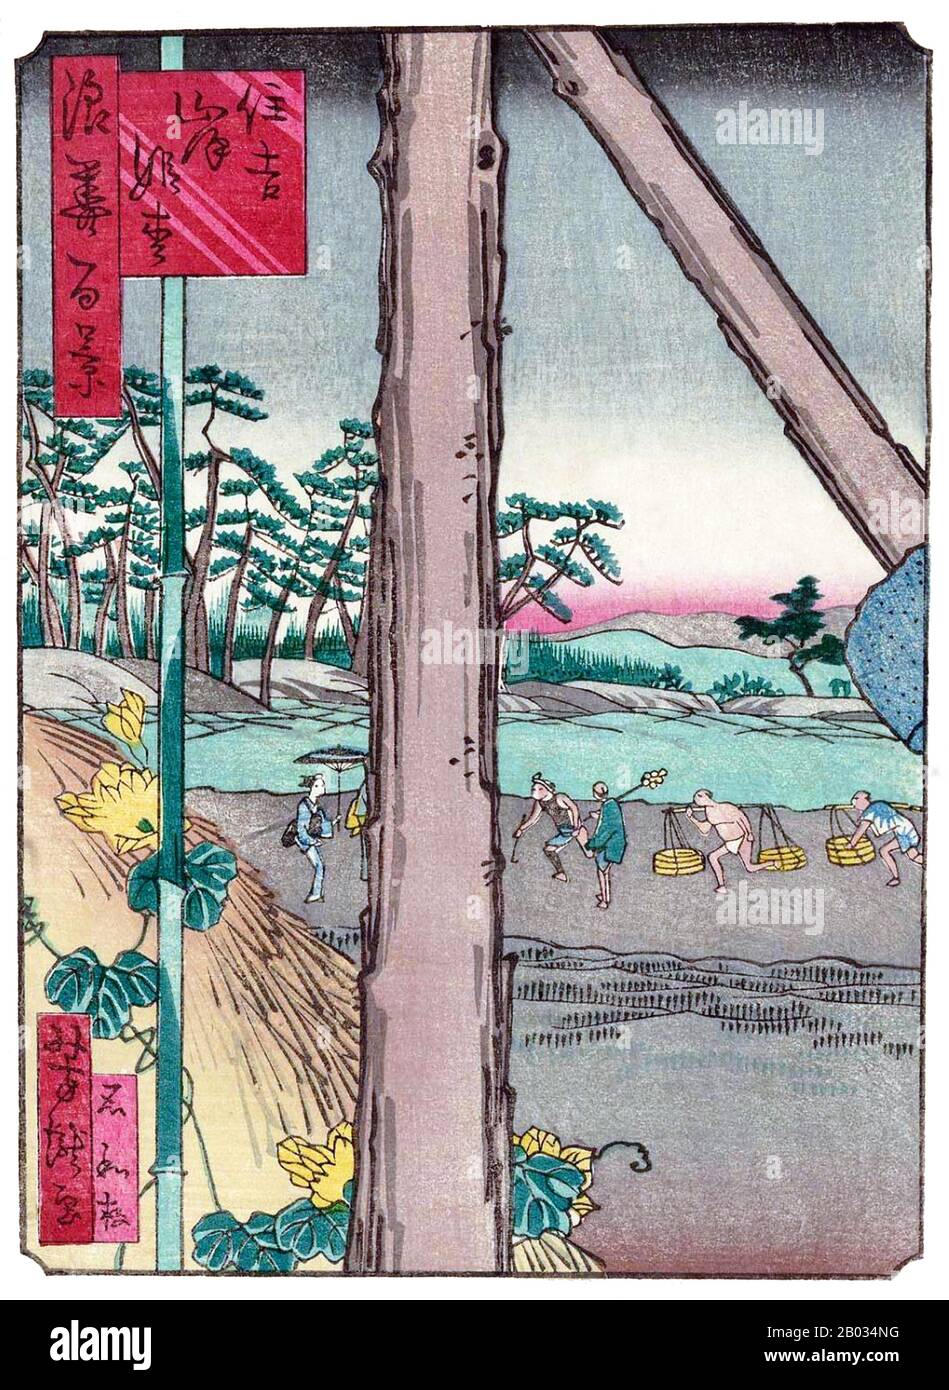 Utagawa Yoshitaki April 13 1841 June 28 19 Also Known As Ichiyosai Yoshitaki Was A Designer Of Ukiyo E Style Japanese Woodblock Prints He Was Active In Both Edo Tokyo And